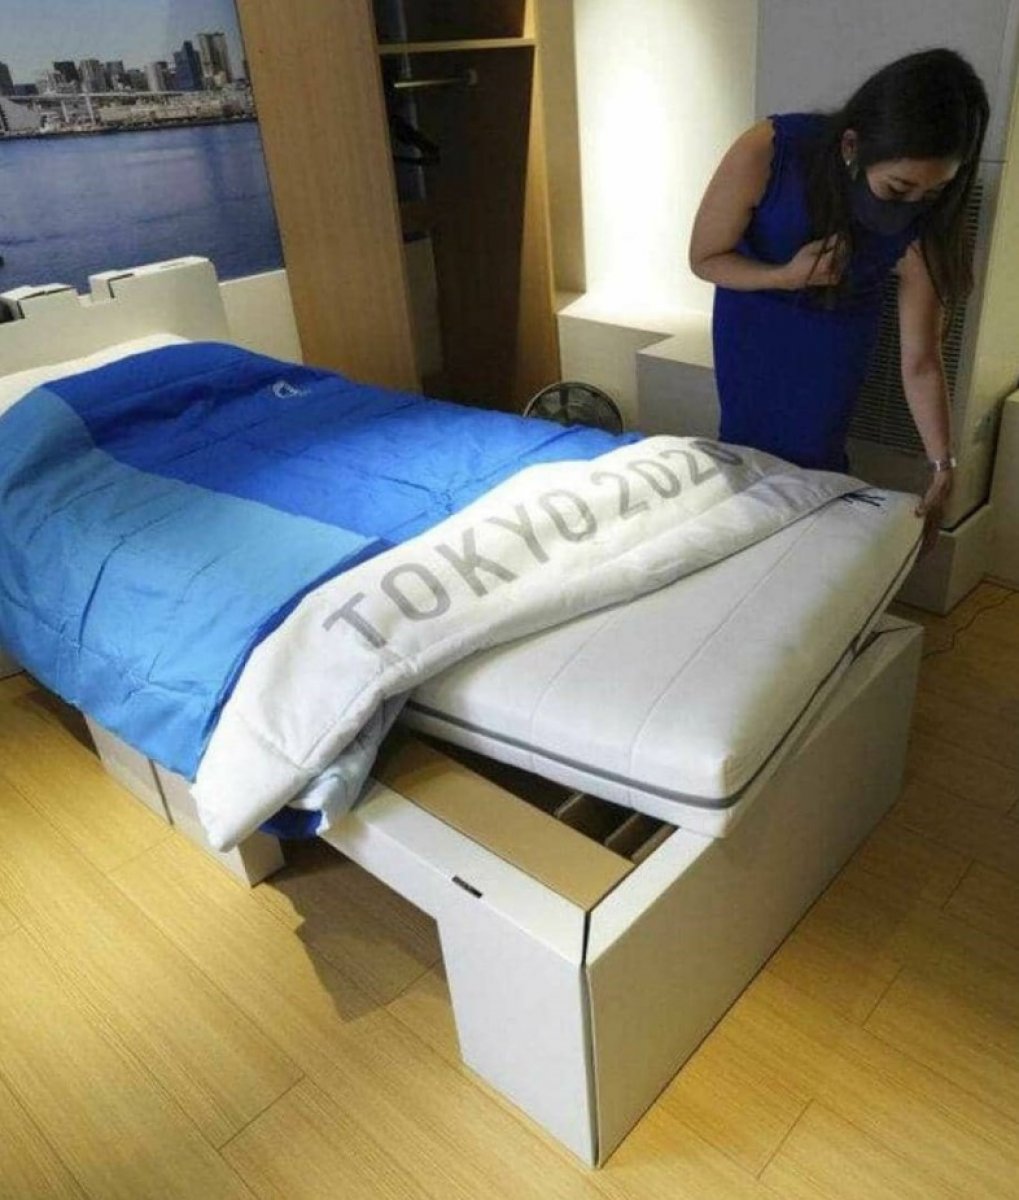 Corona precaution at Tokyo Olympics: Cardboard bed #1